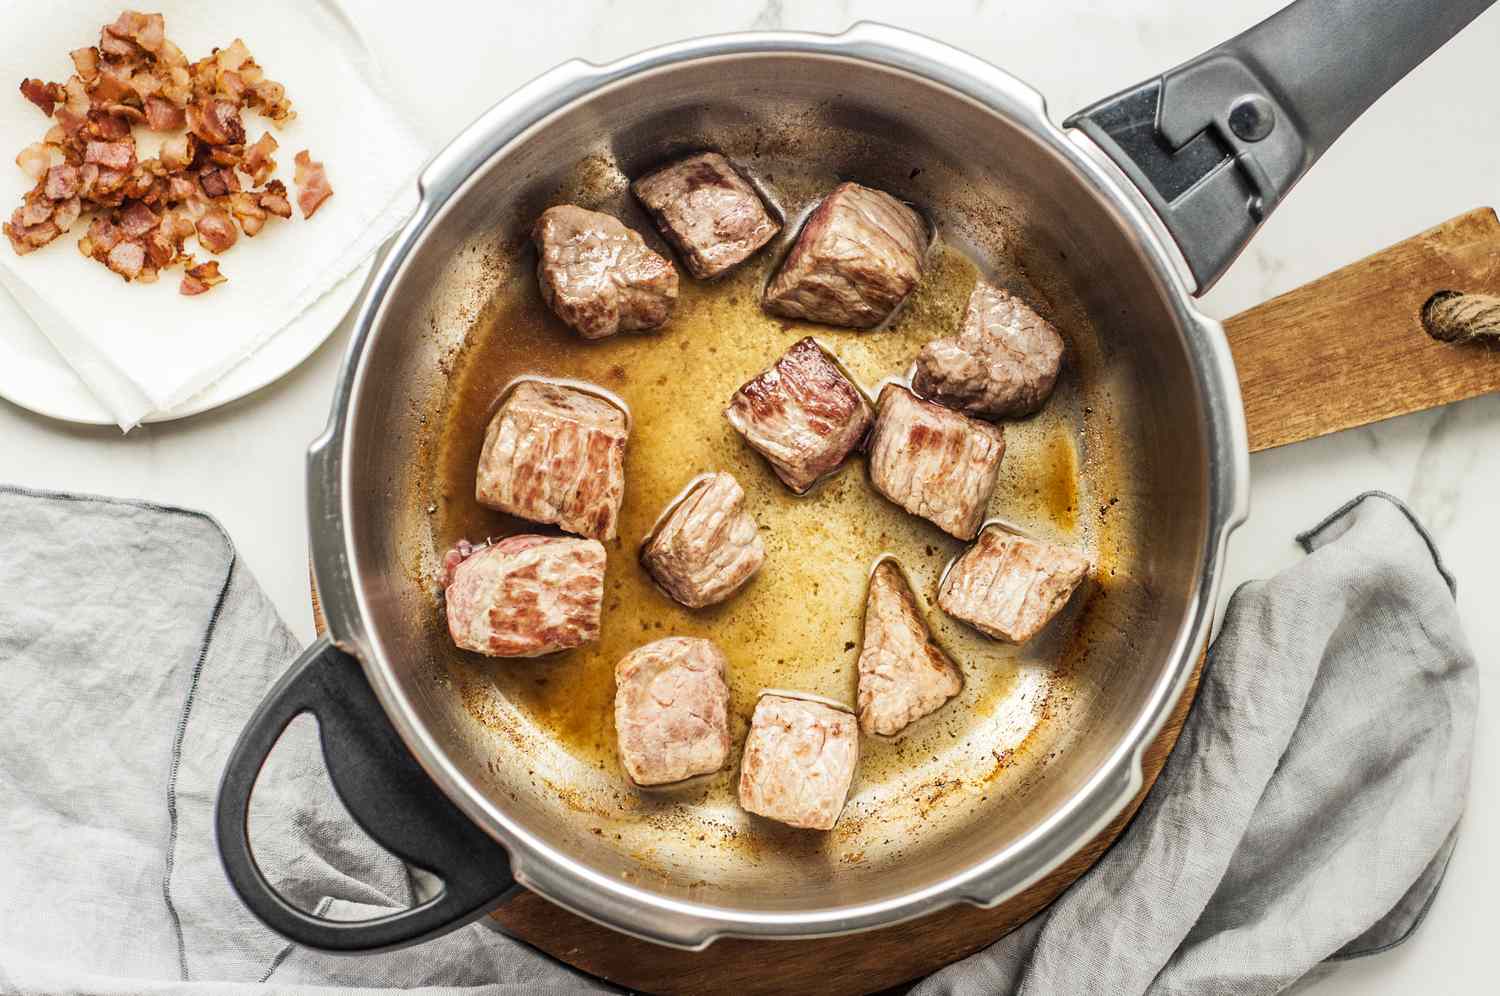 Instant pot steak recipe - Delicious and Easy Pressure cooker steak recipe